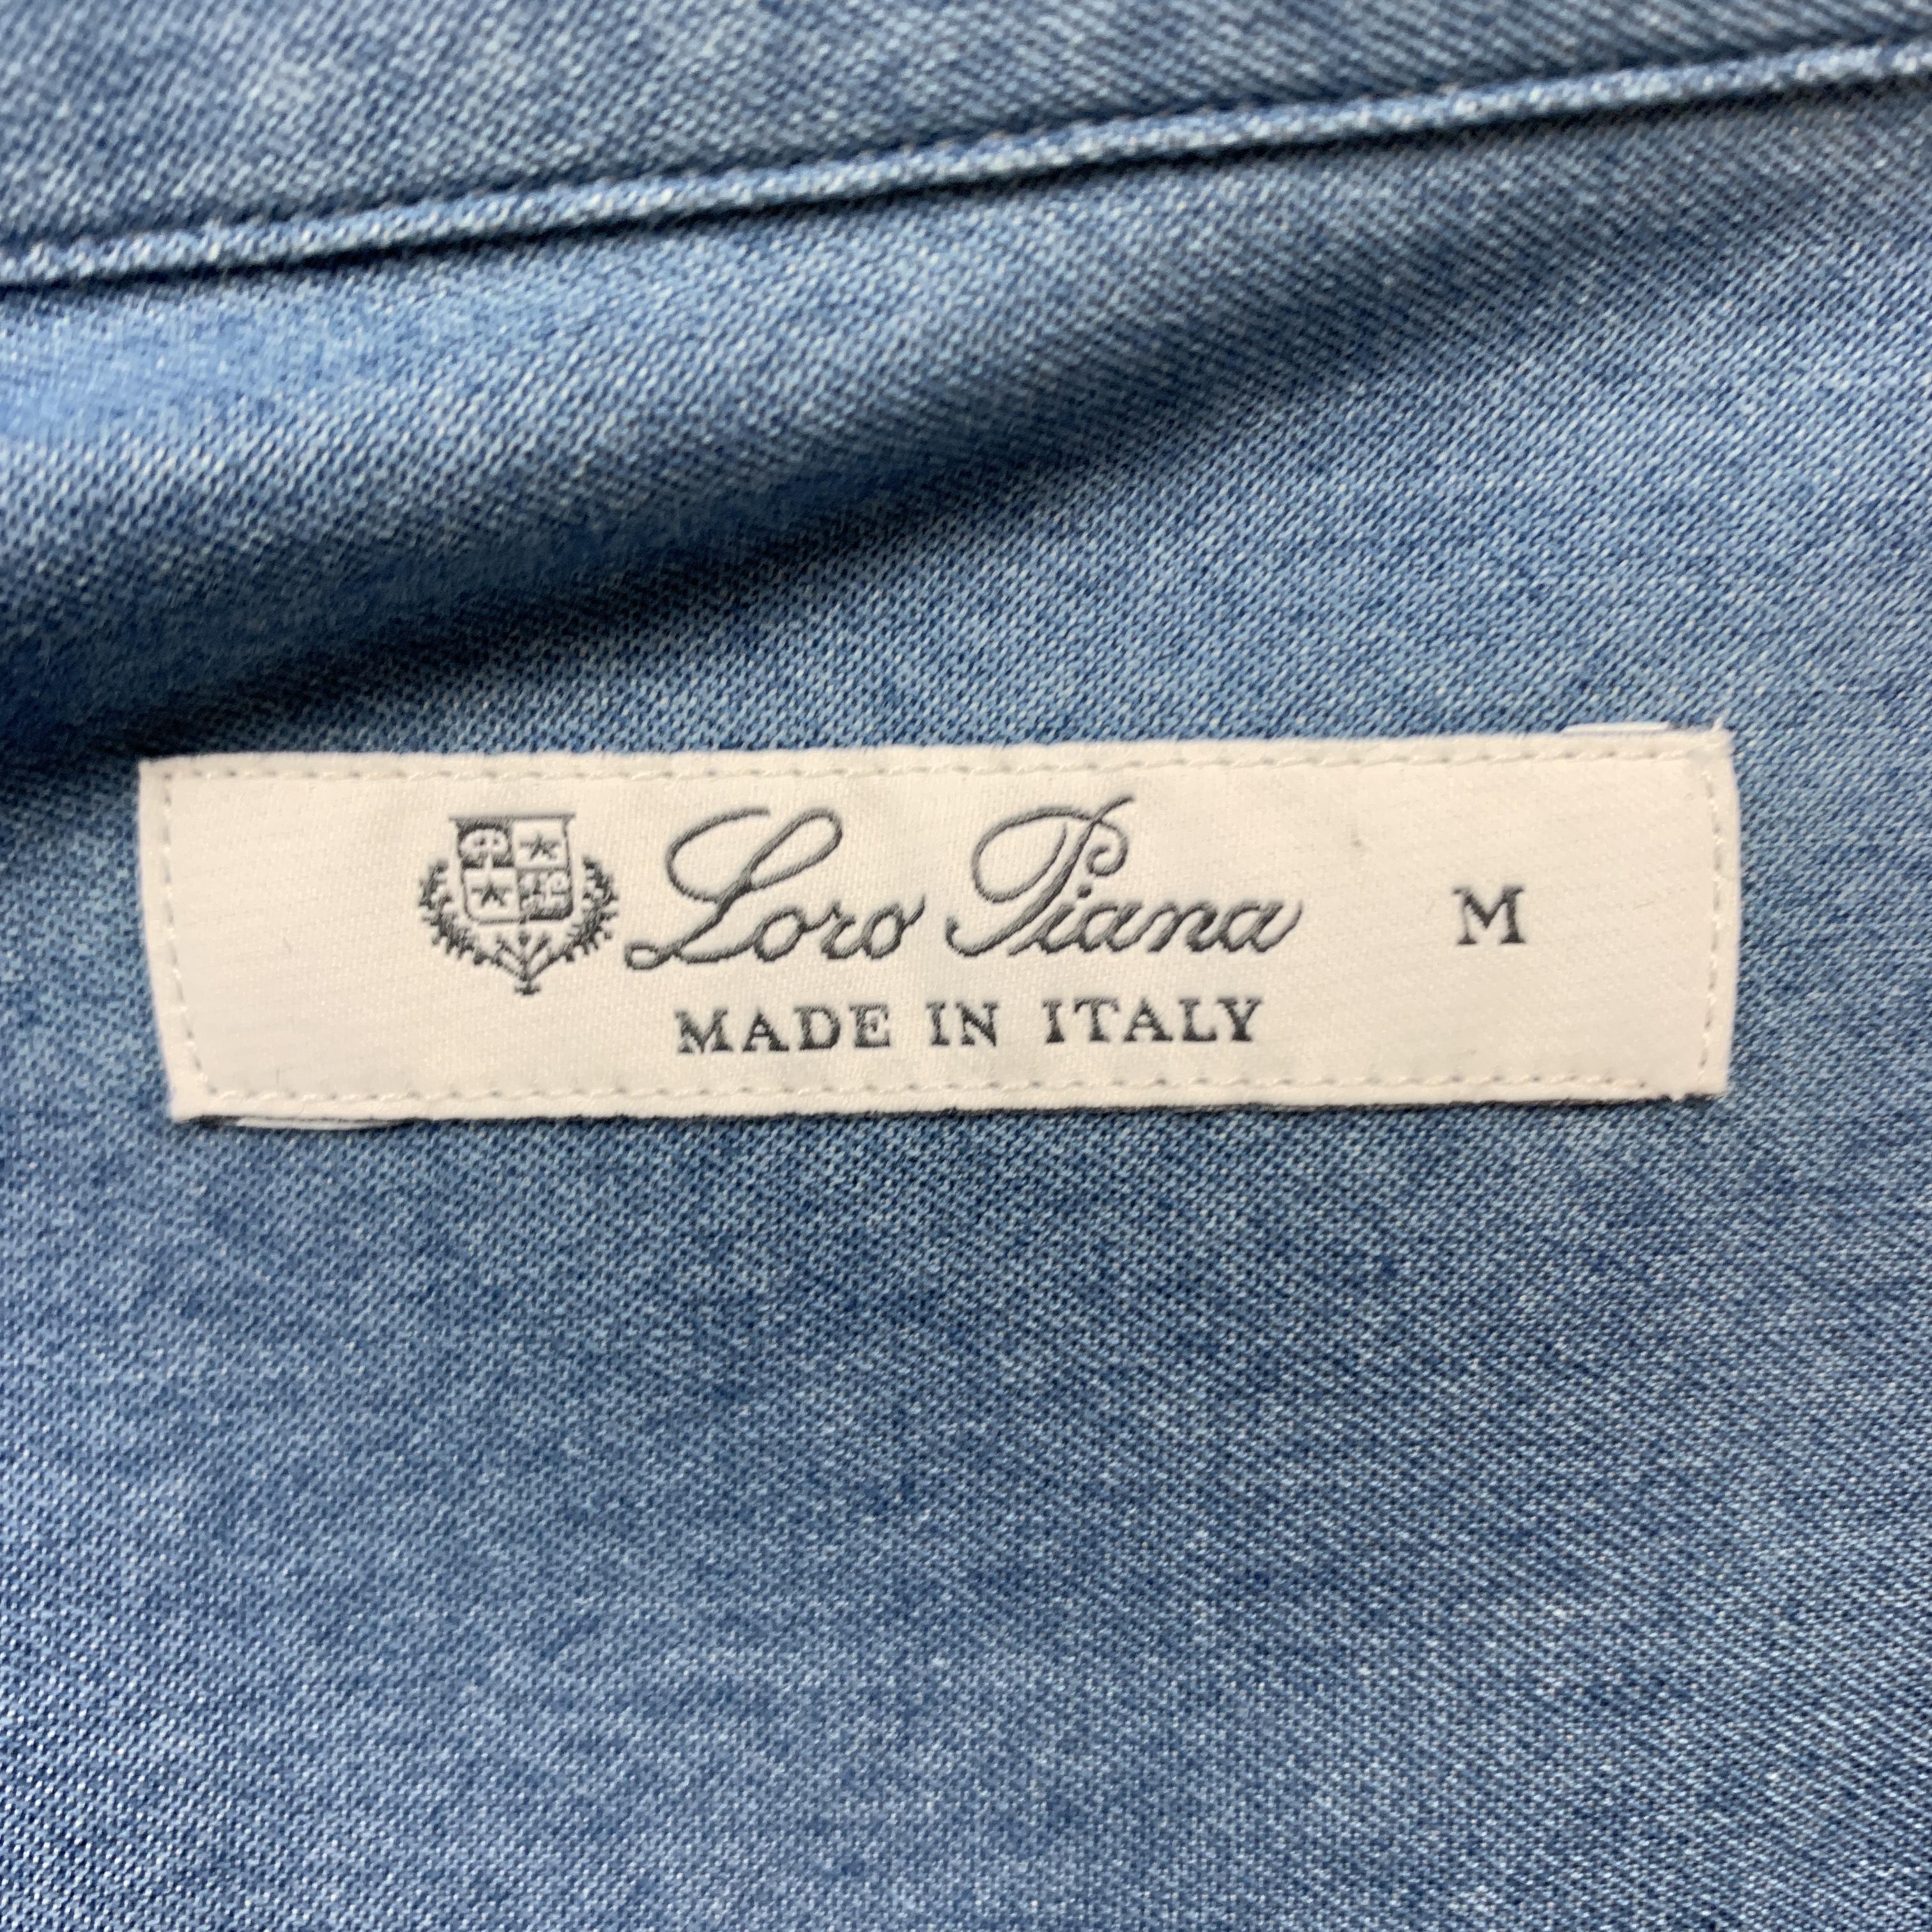 Men's LORO PIANA Size M Indigo Solid Cotton Button Up Long Sleeve Shirt